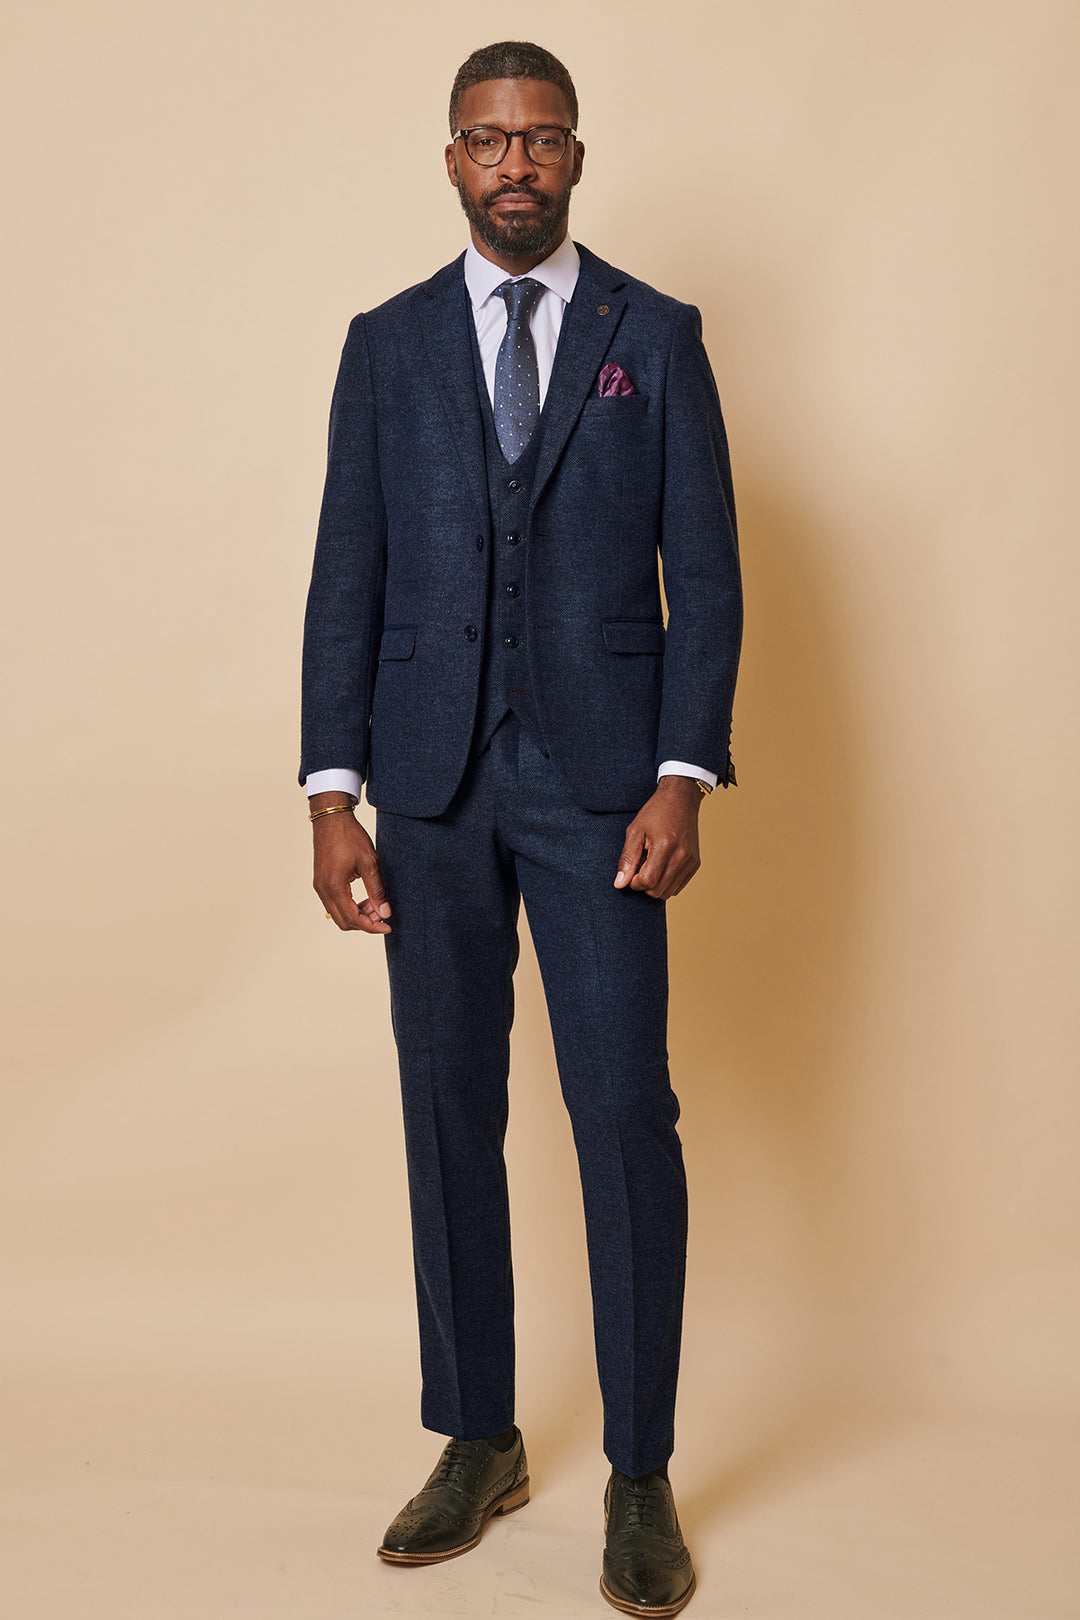 MARLOW - Navy Tweed Three Piece Suit